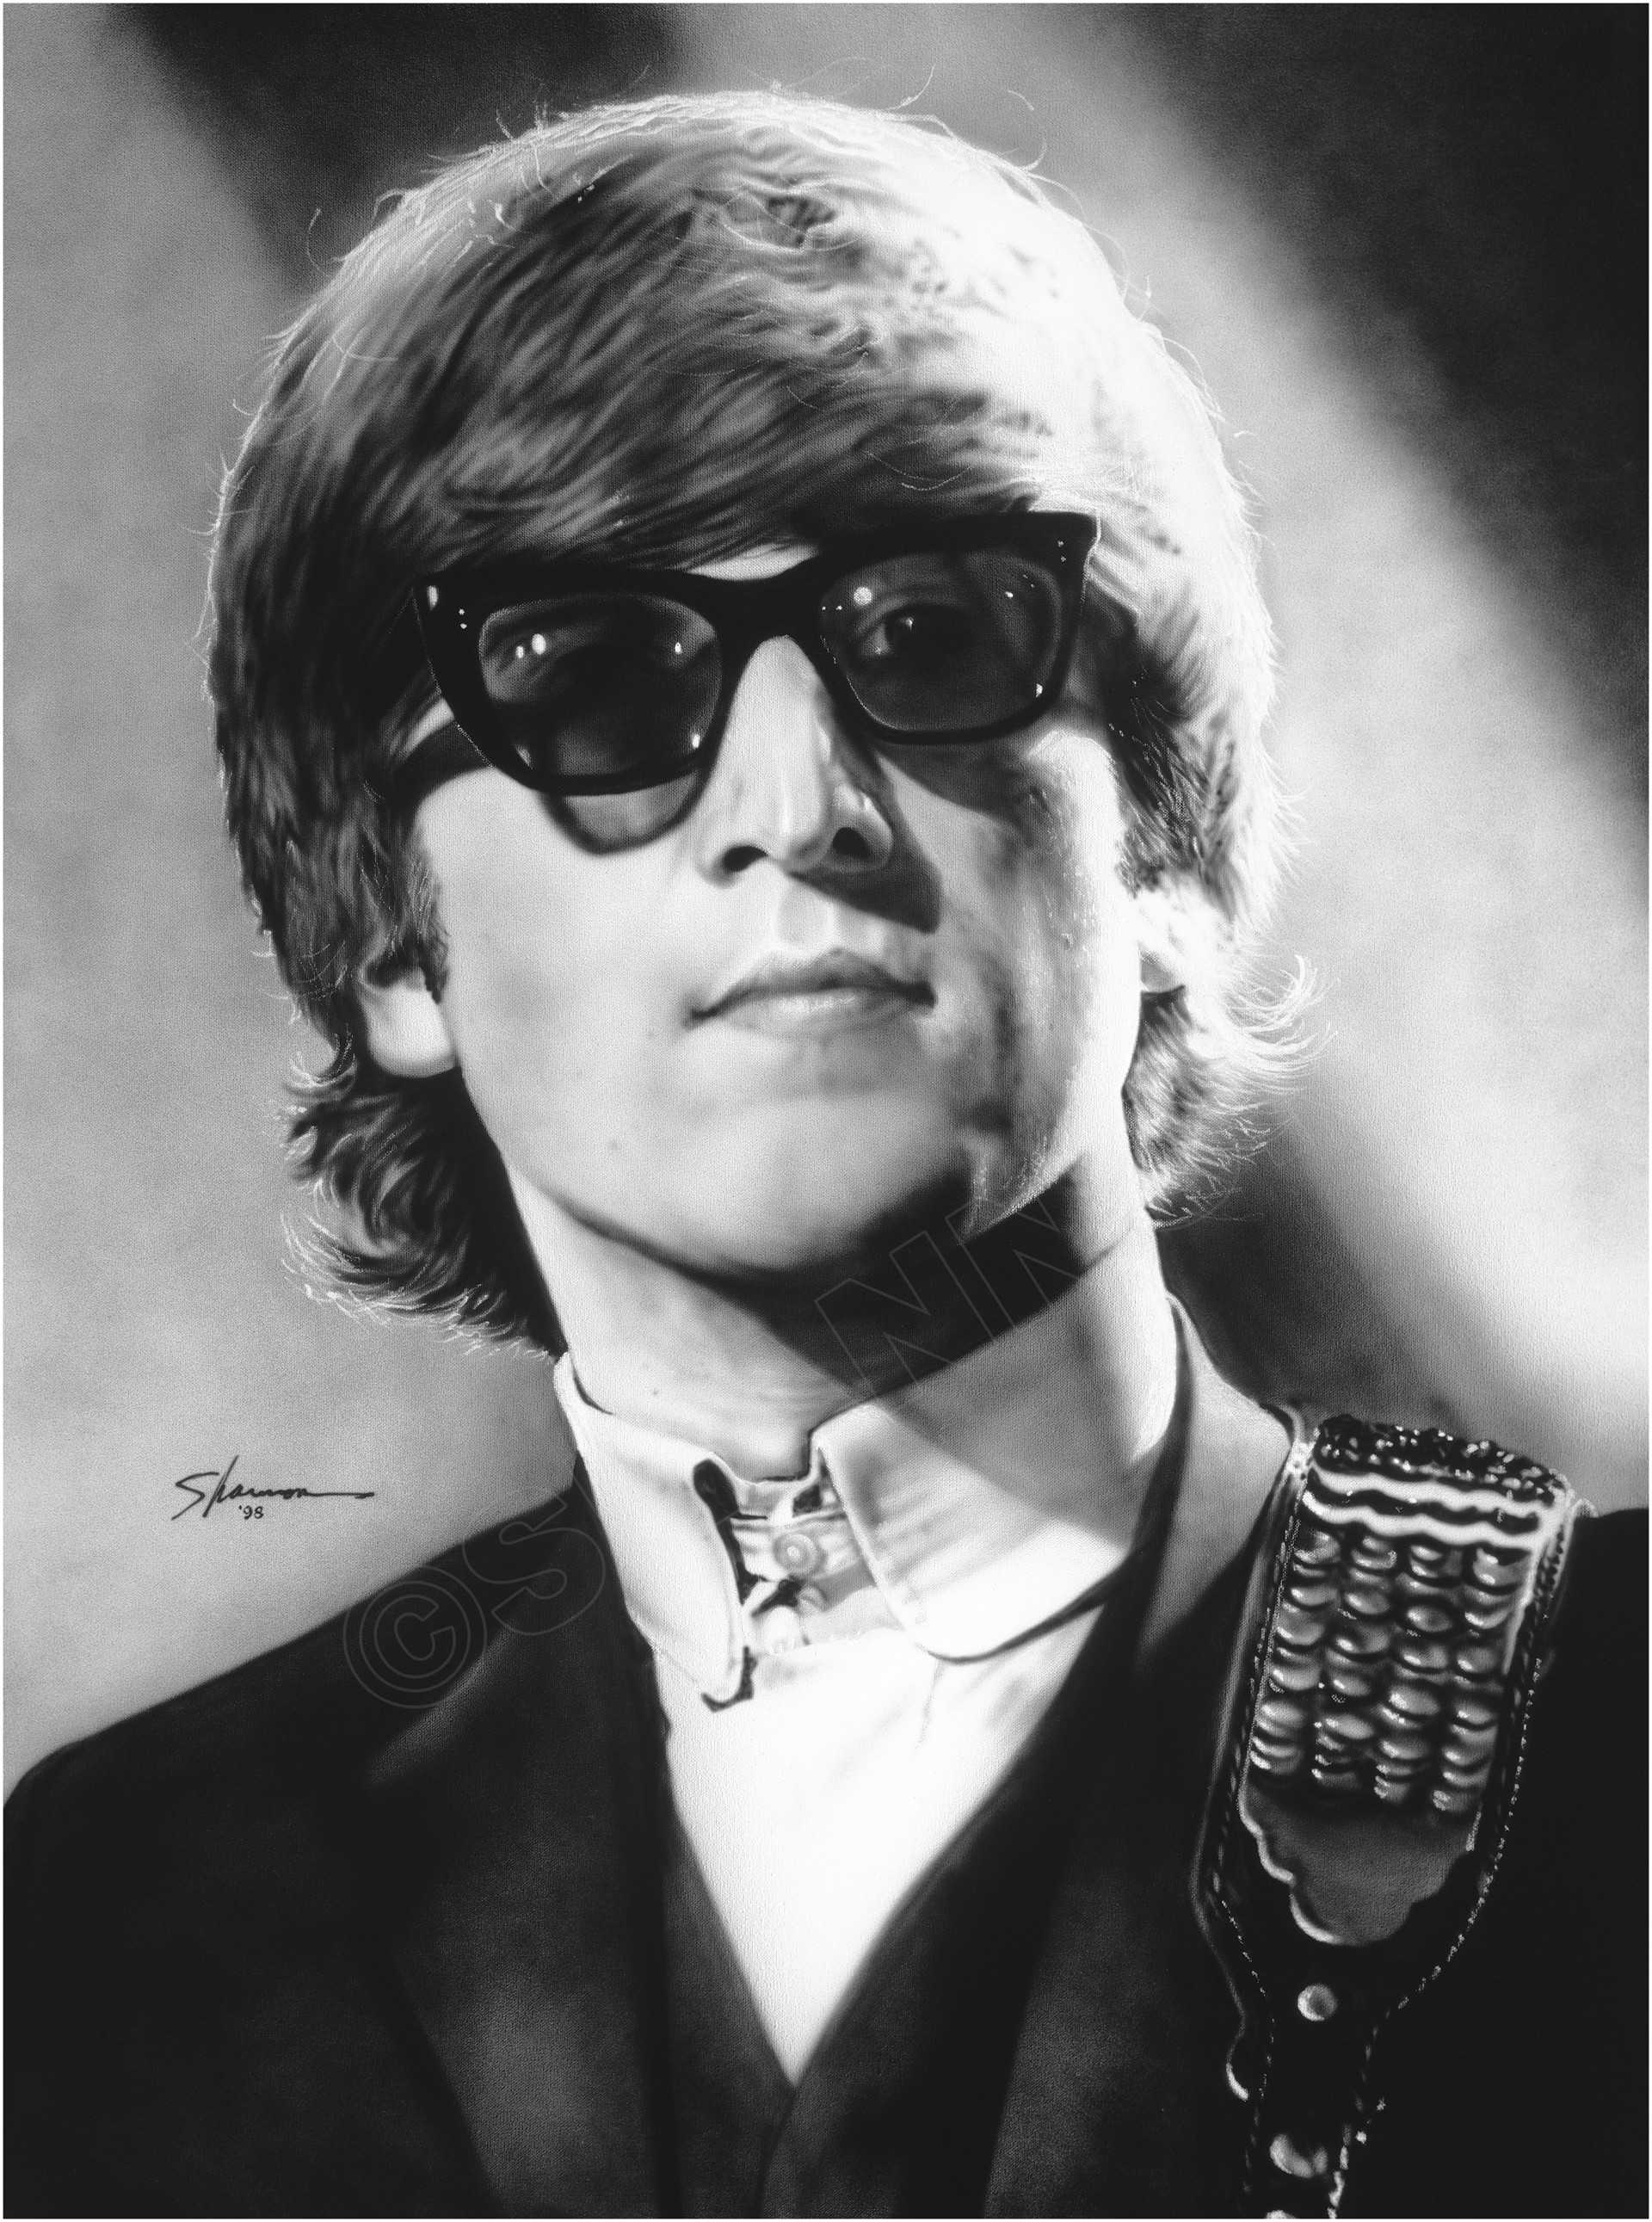 John ‘65 by Shannon MacDonald The World's Greatest Beatles Artist